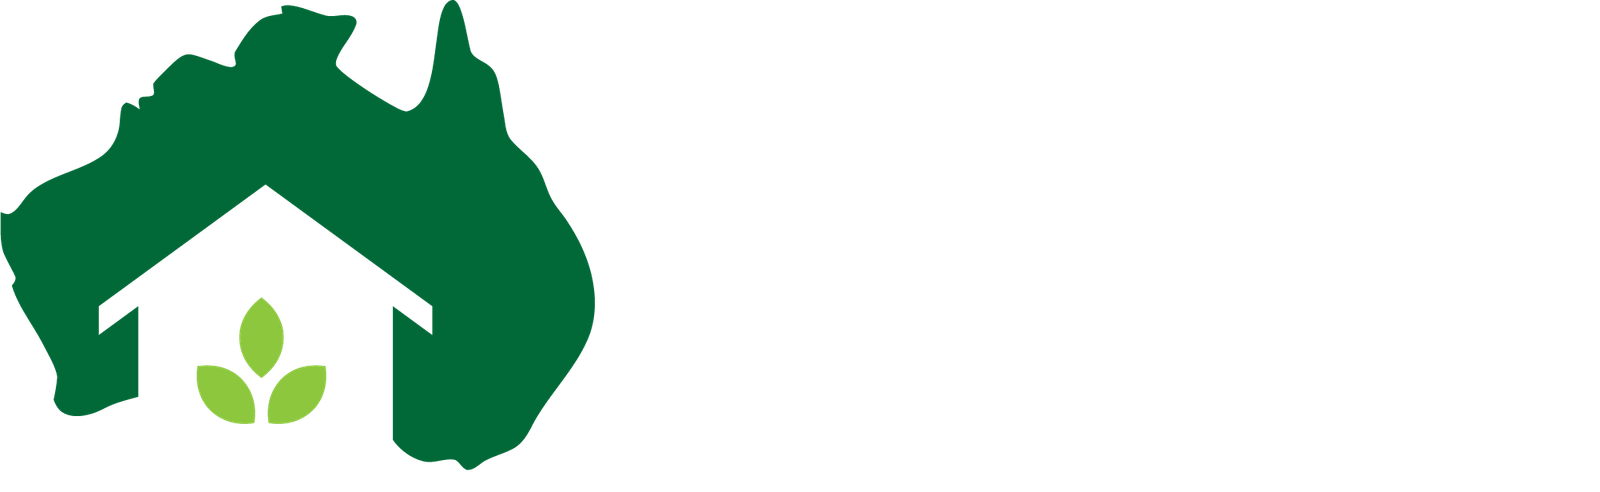 Buy Greenhouses Online Australia | Greenhouse Kits For Sale Australia